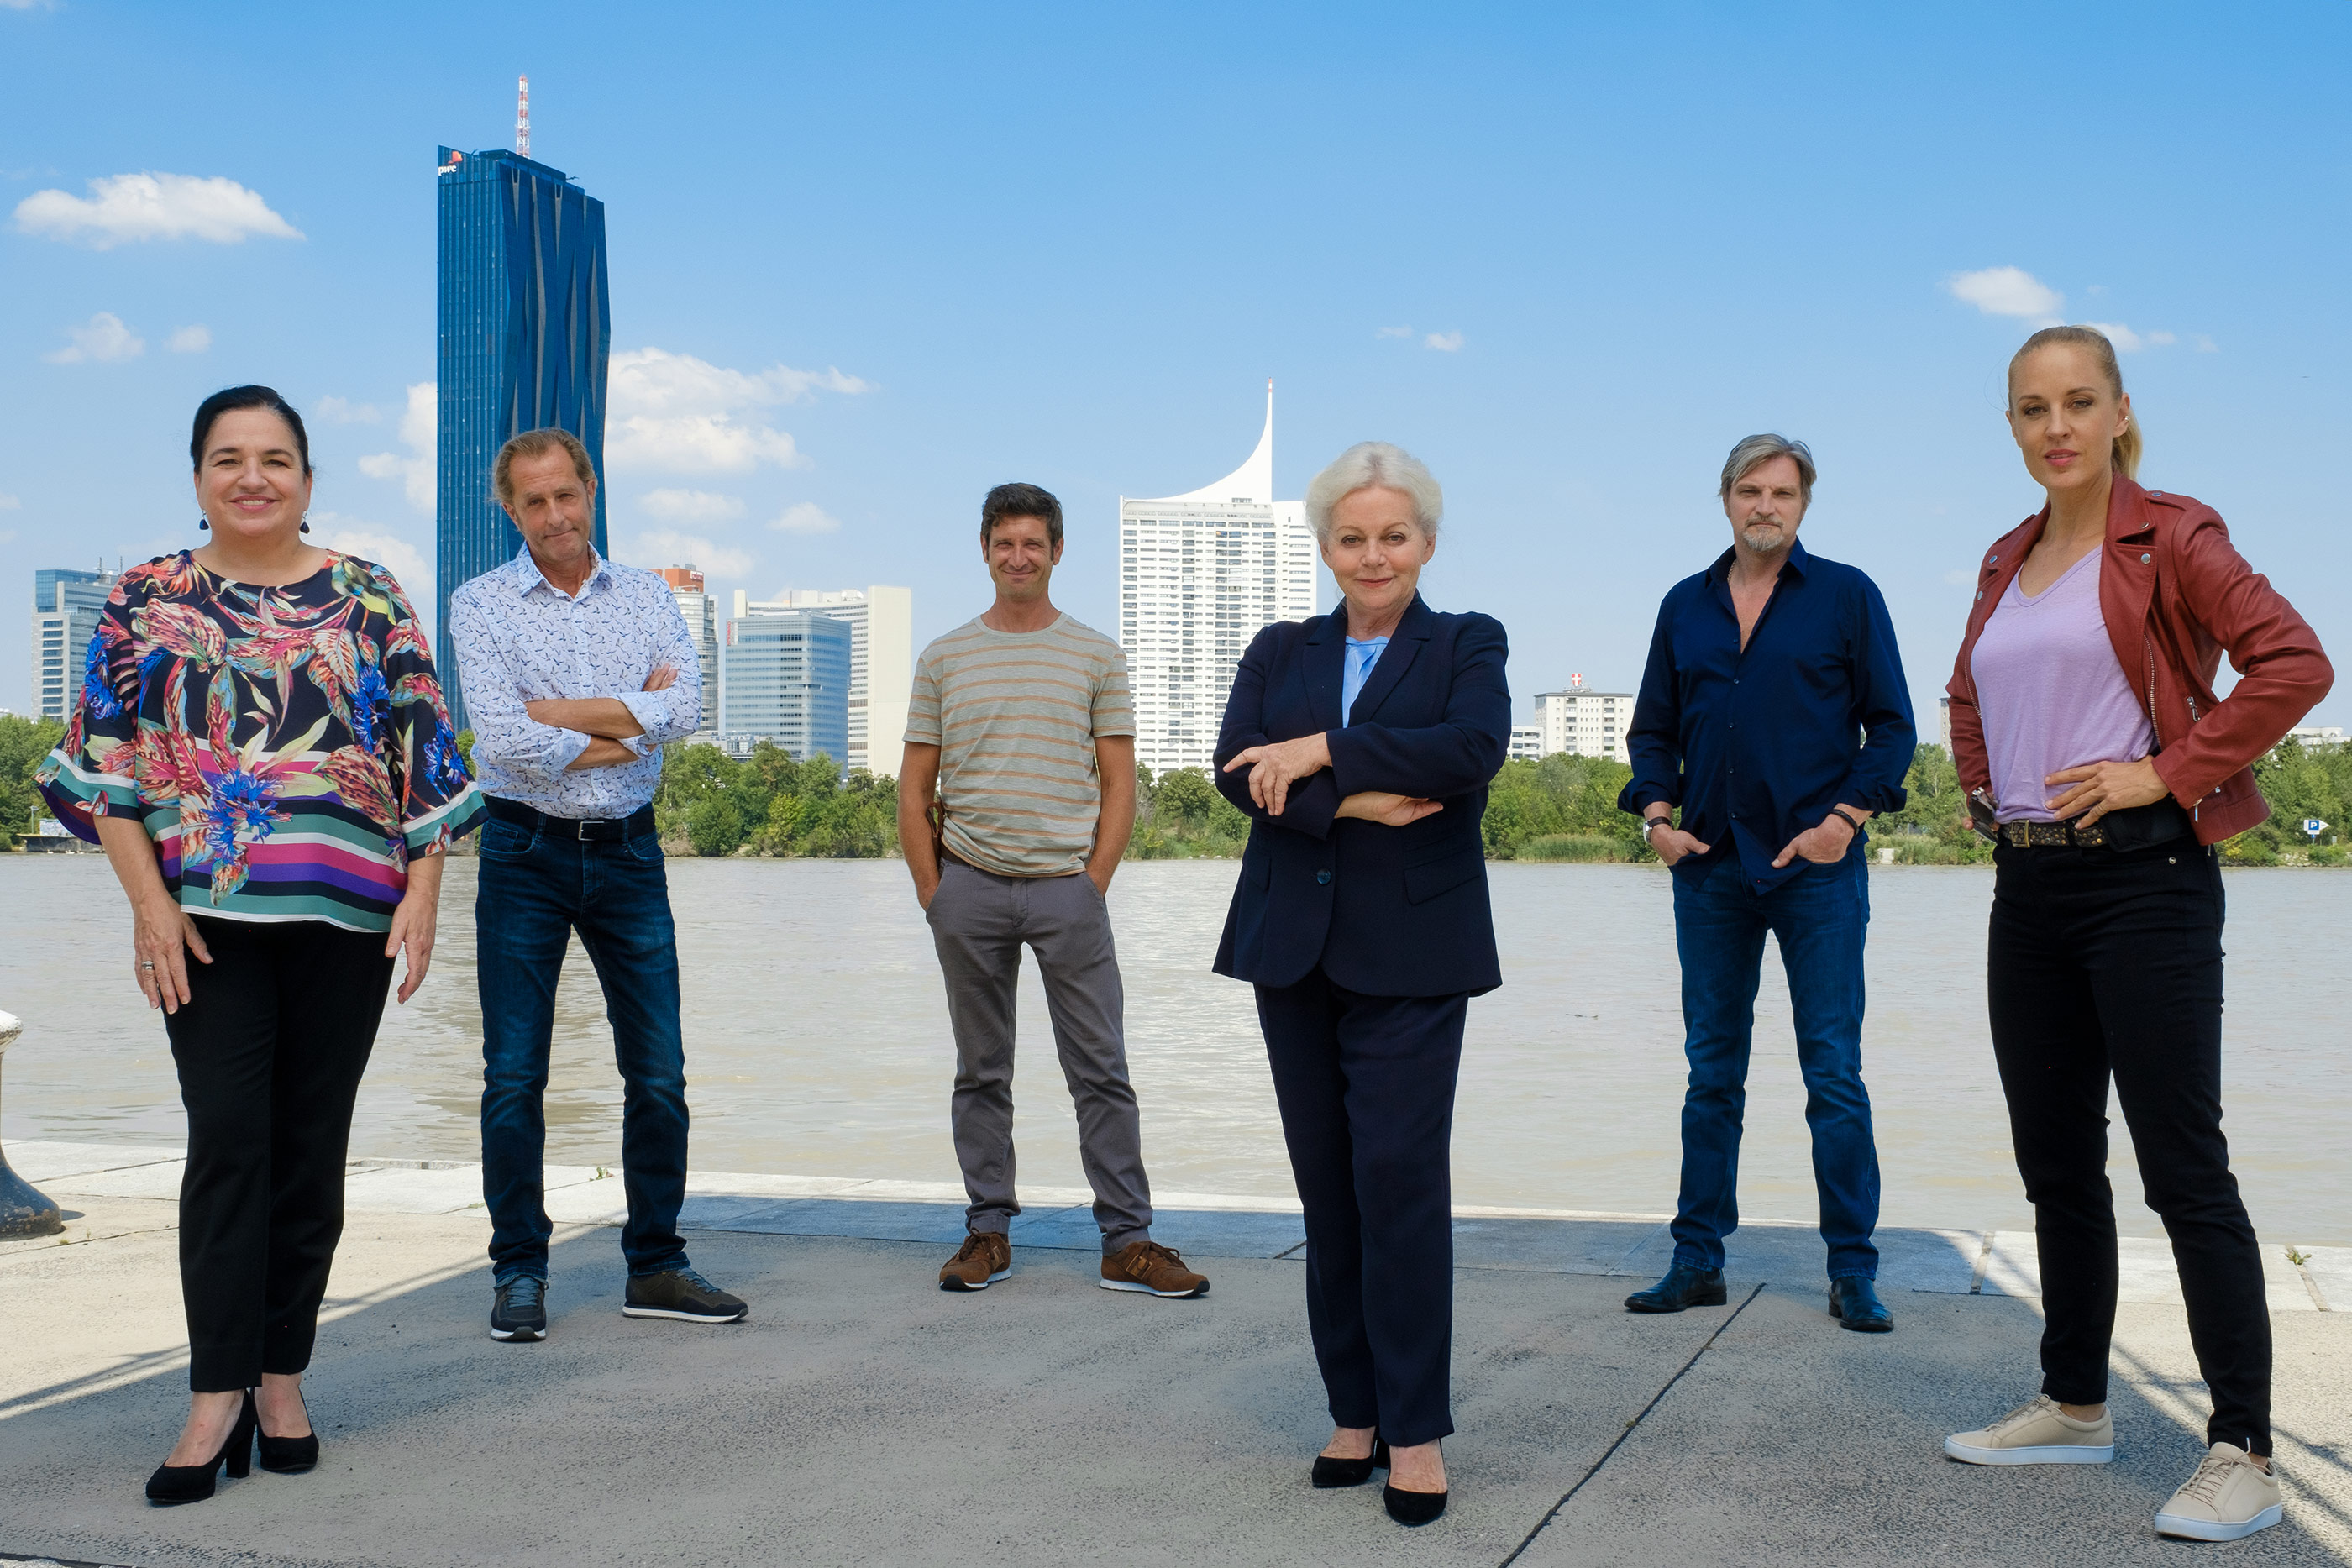 aria Happel, Helmut Bohatsch, Andreas Kiendl, Brigitte Kren, SOKO DONAU/SOKO WIEN 2020 - 16.STAFFEL - © Satel Film/Petro Domenigg